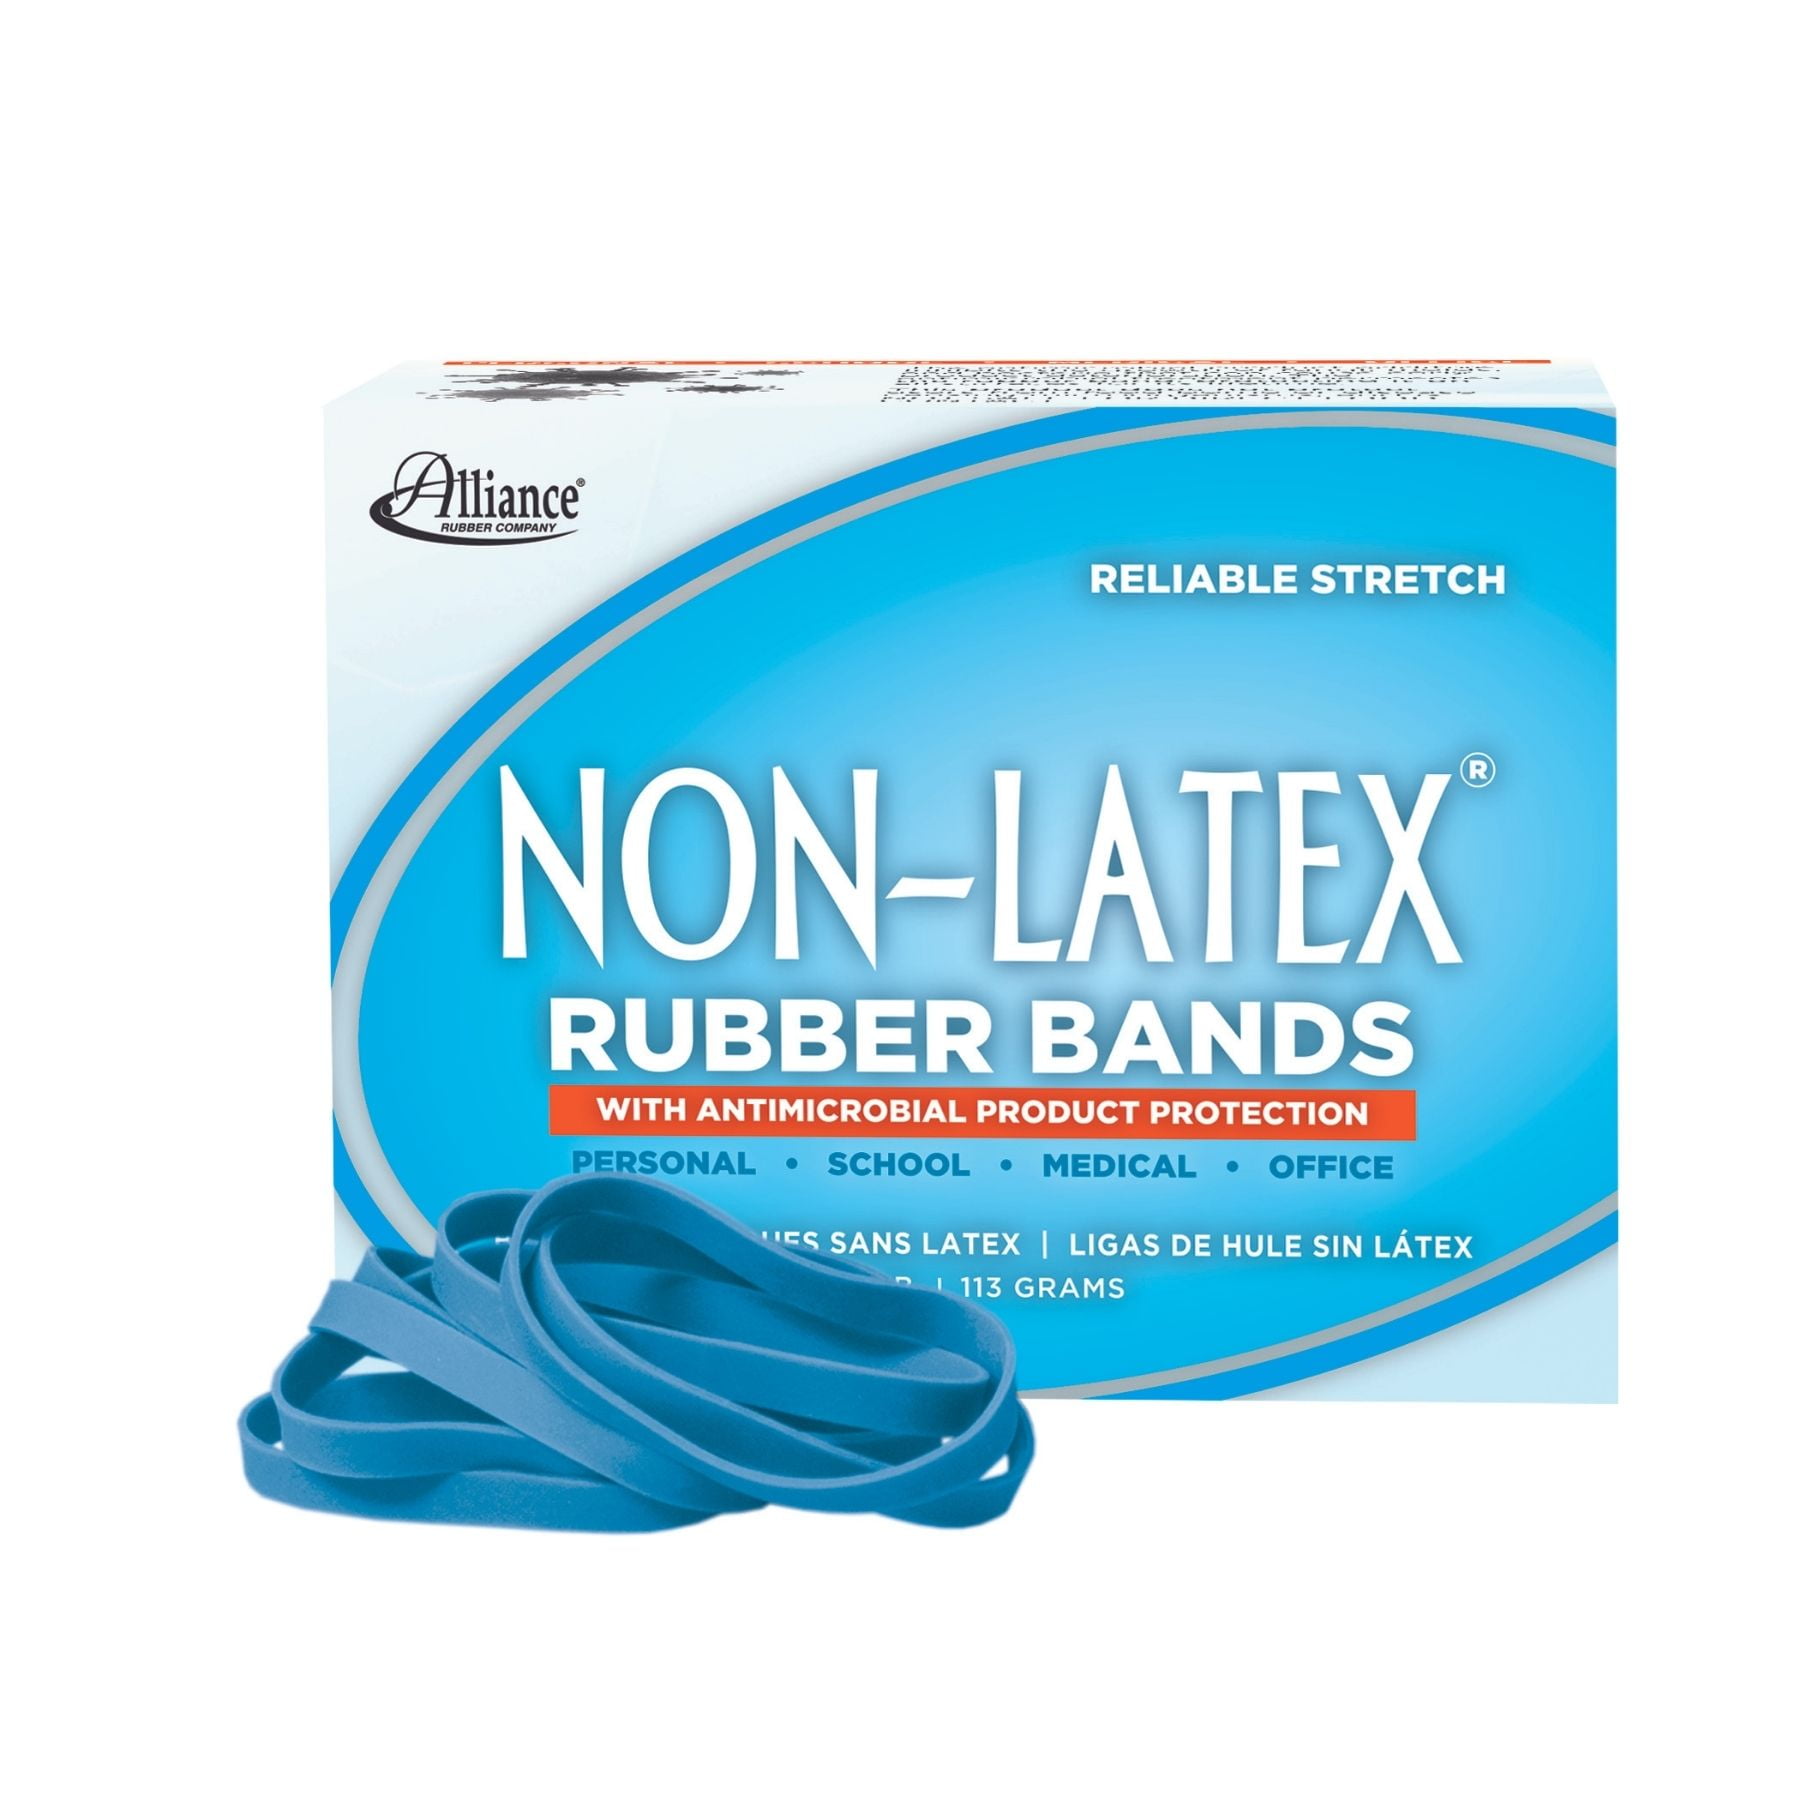 Alliance Non-Latex Rubber Bands Sz 19 Orange 3-1/2 x 1/16 1750 Bands/1lb Box 